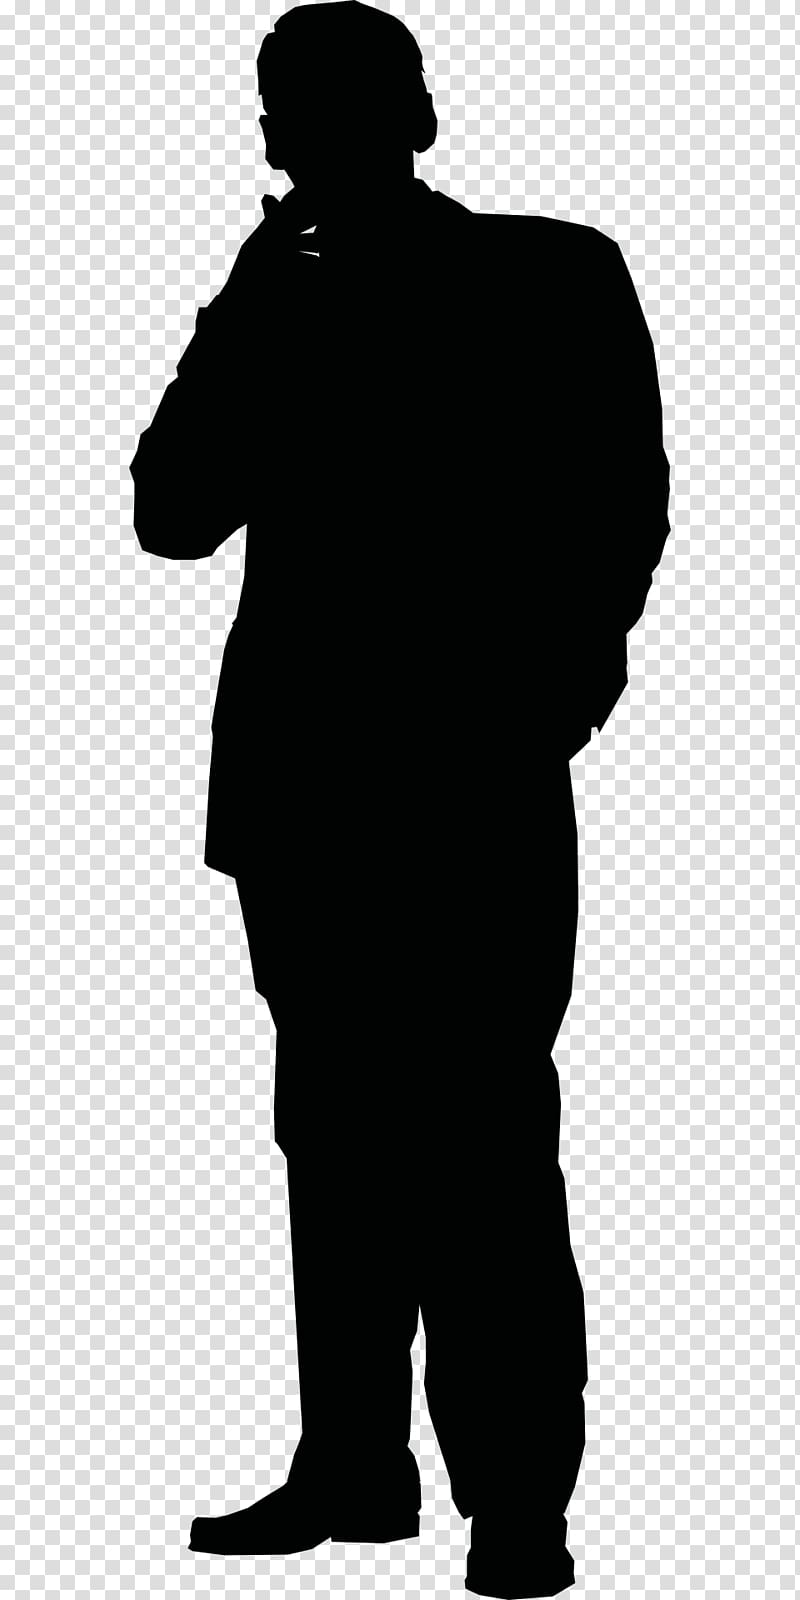 Silhouette Stick figure , businessman man transparent.